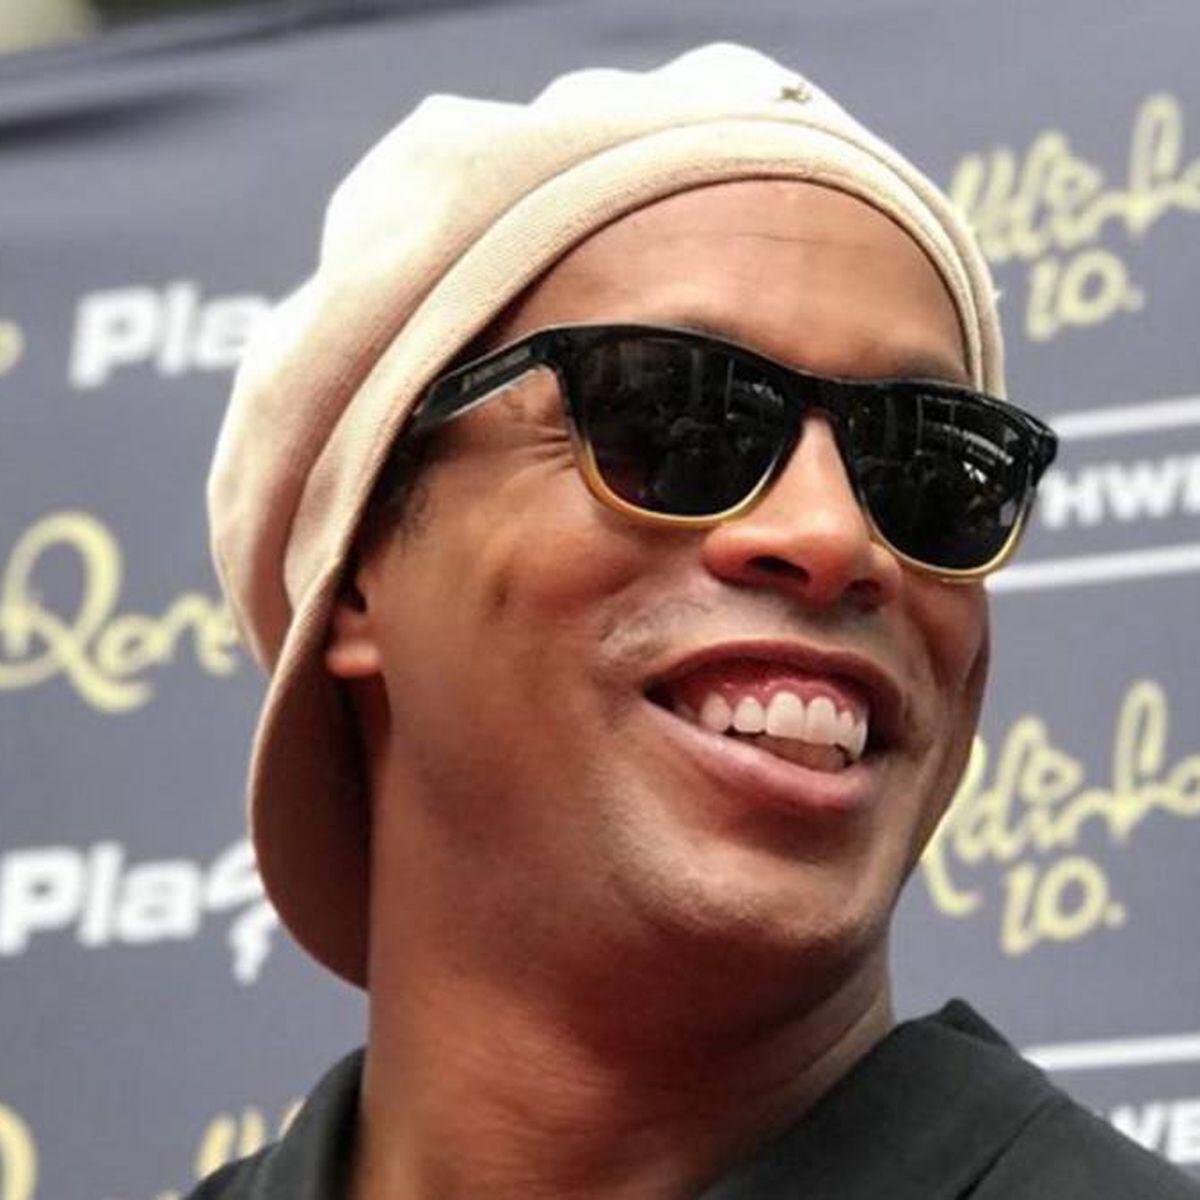 Ronaldinho joins Ibai's Kings League team on Twitch & the internet is  stunned - Dexerto